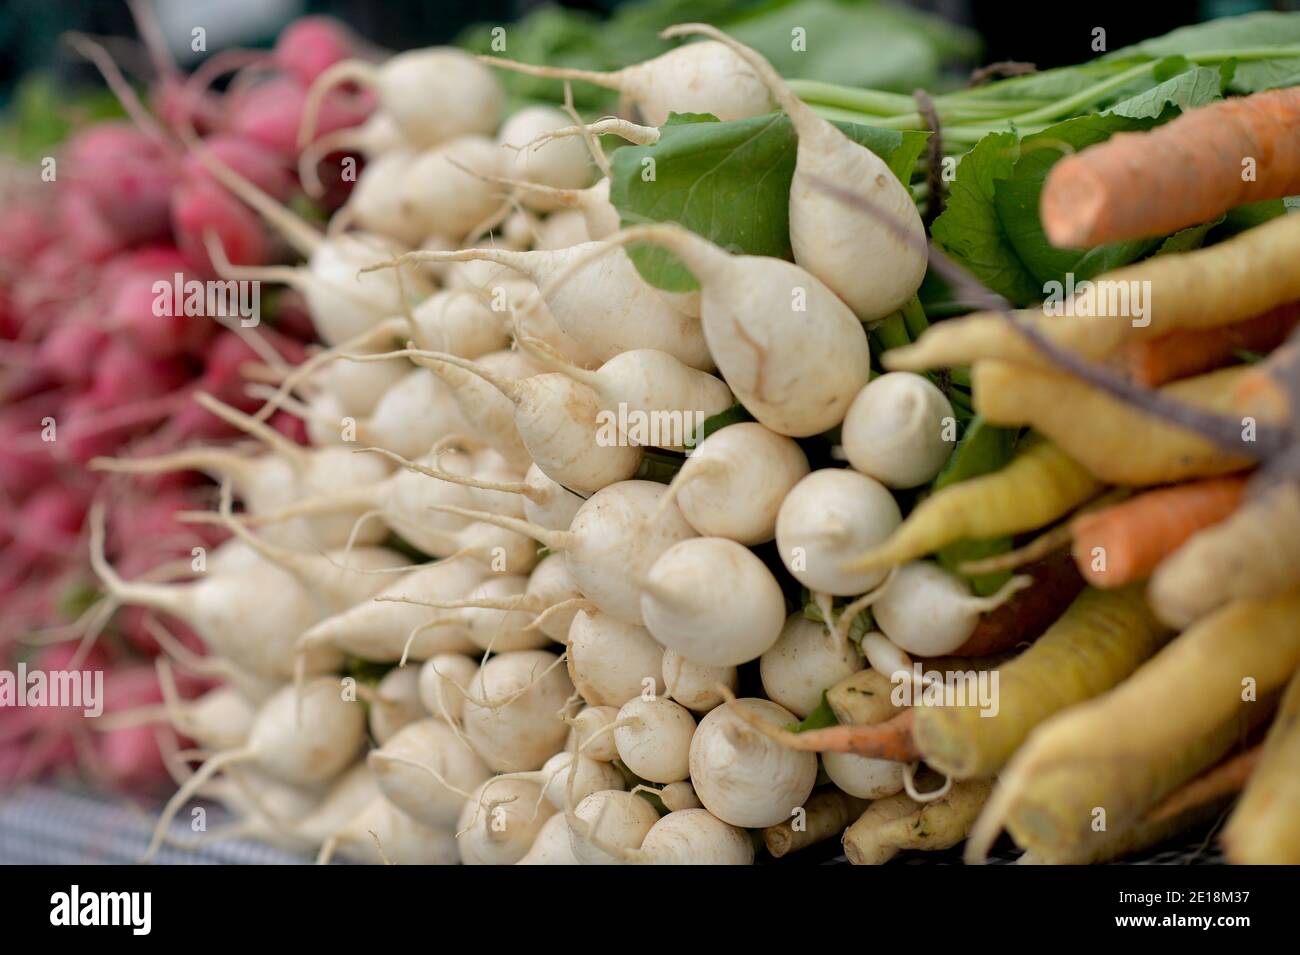 Close-up view of fresh radishes at market Stock Photo